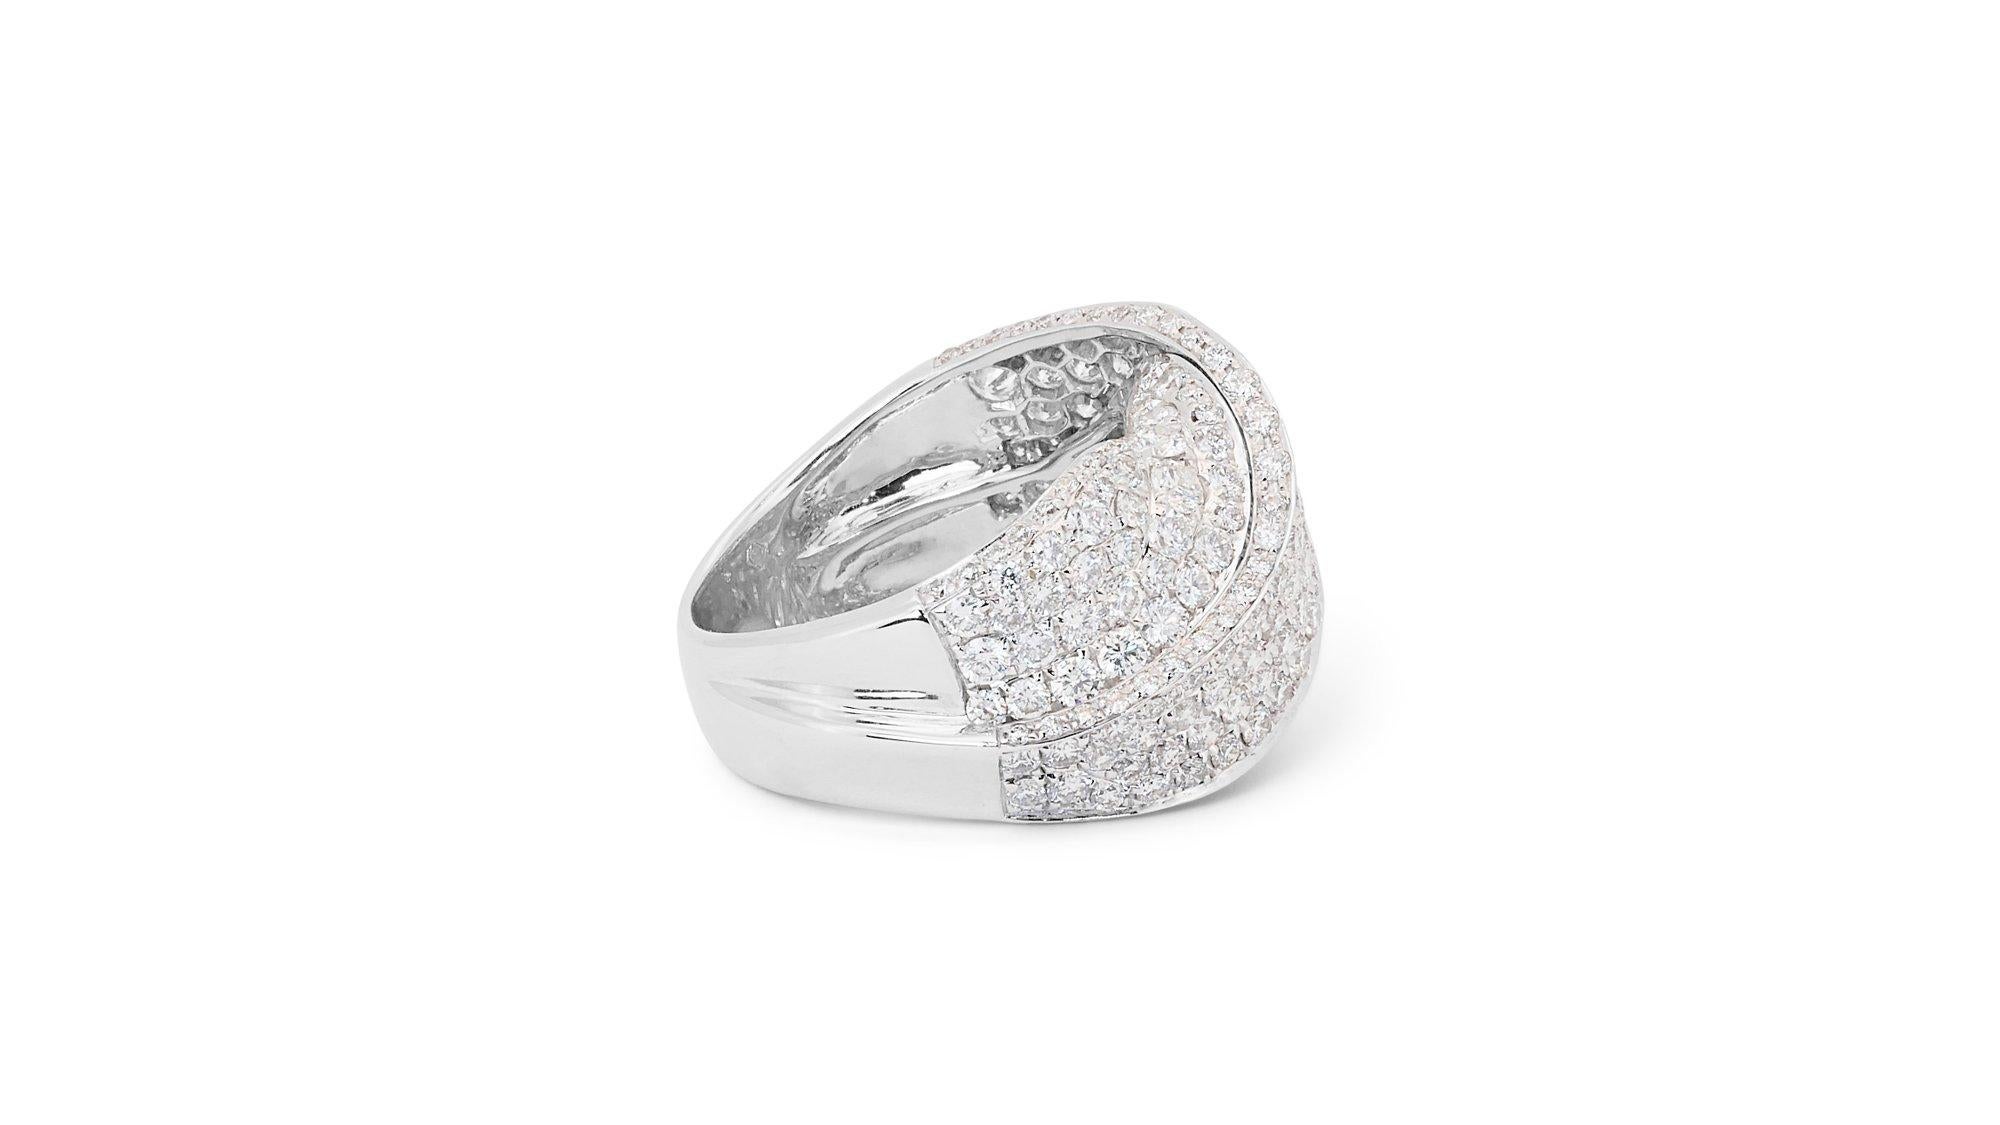 Elegant 18k White Gold Dome Ring with 4.50 Ct Natural Diamonds IGI Certificate 2